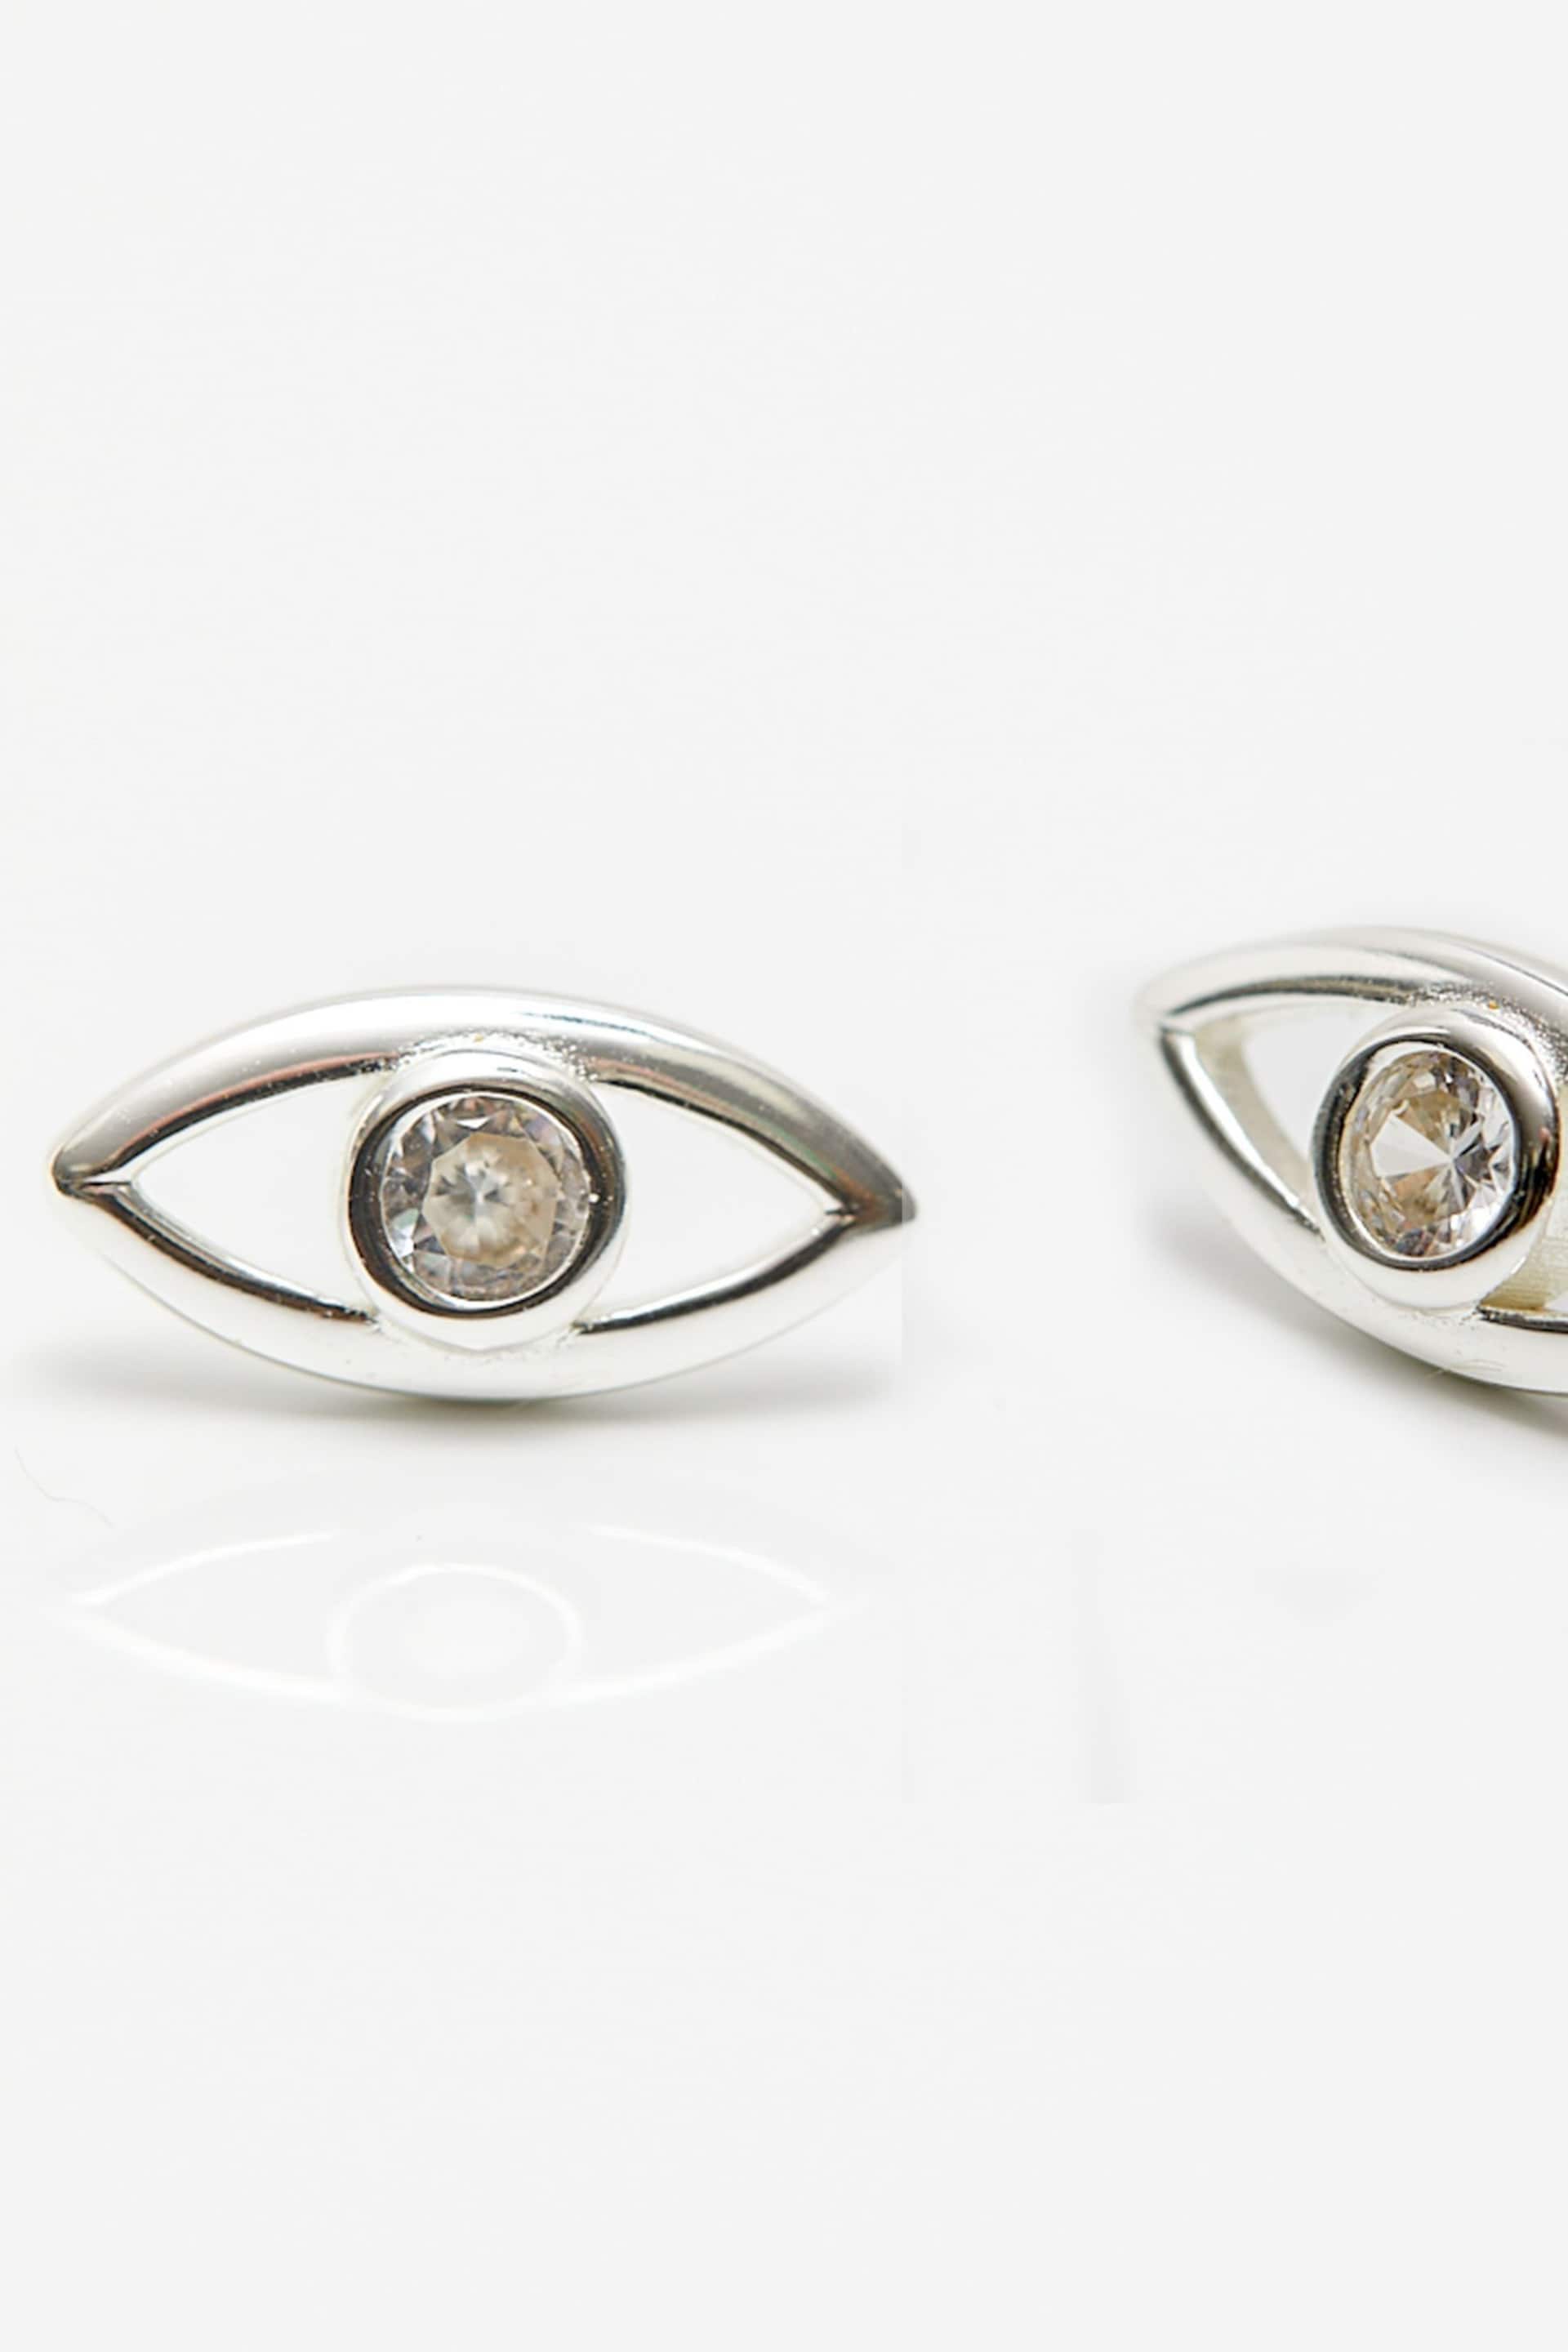 Simply Silver Sterling Silver Mini Evil Eye Stud Earrings - Image 3 of 3